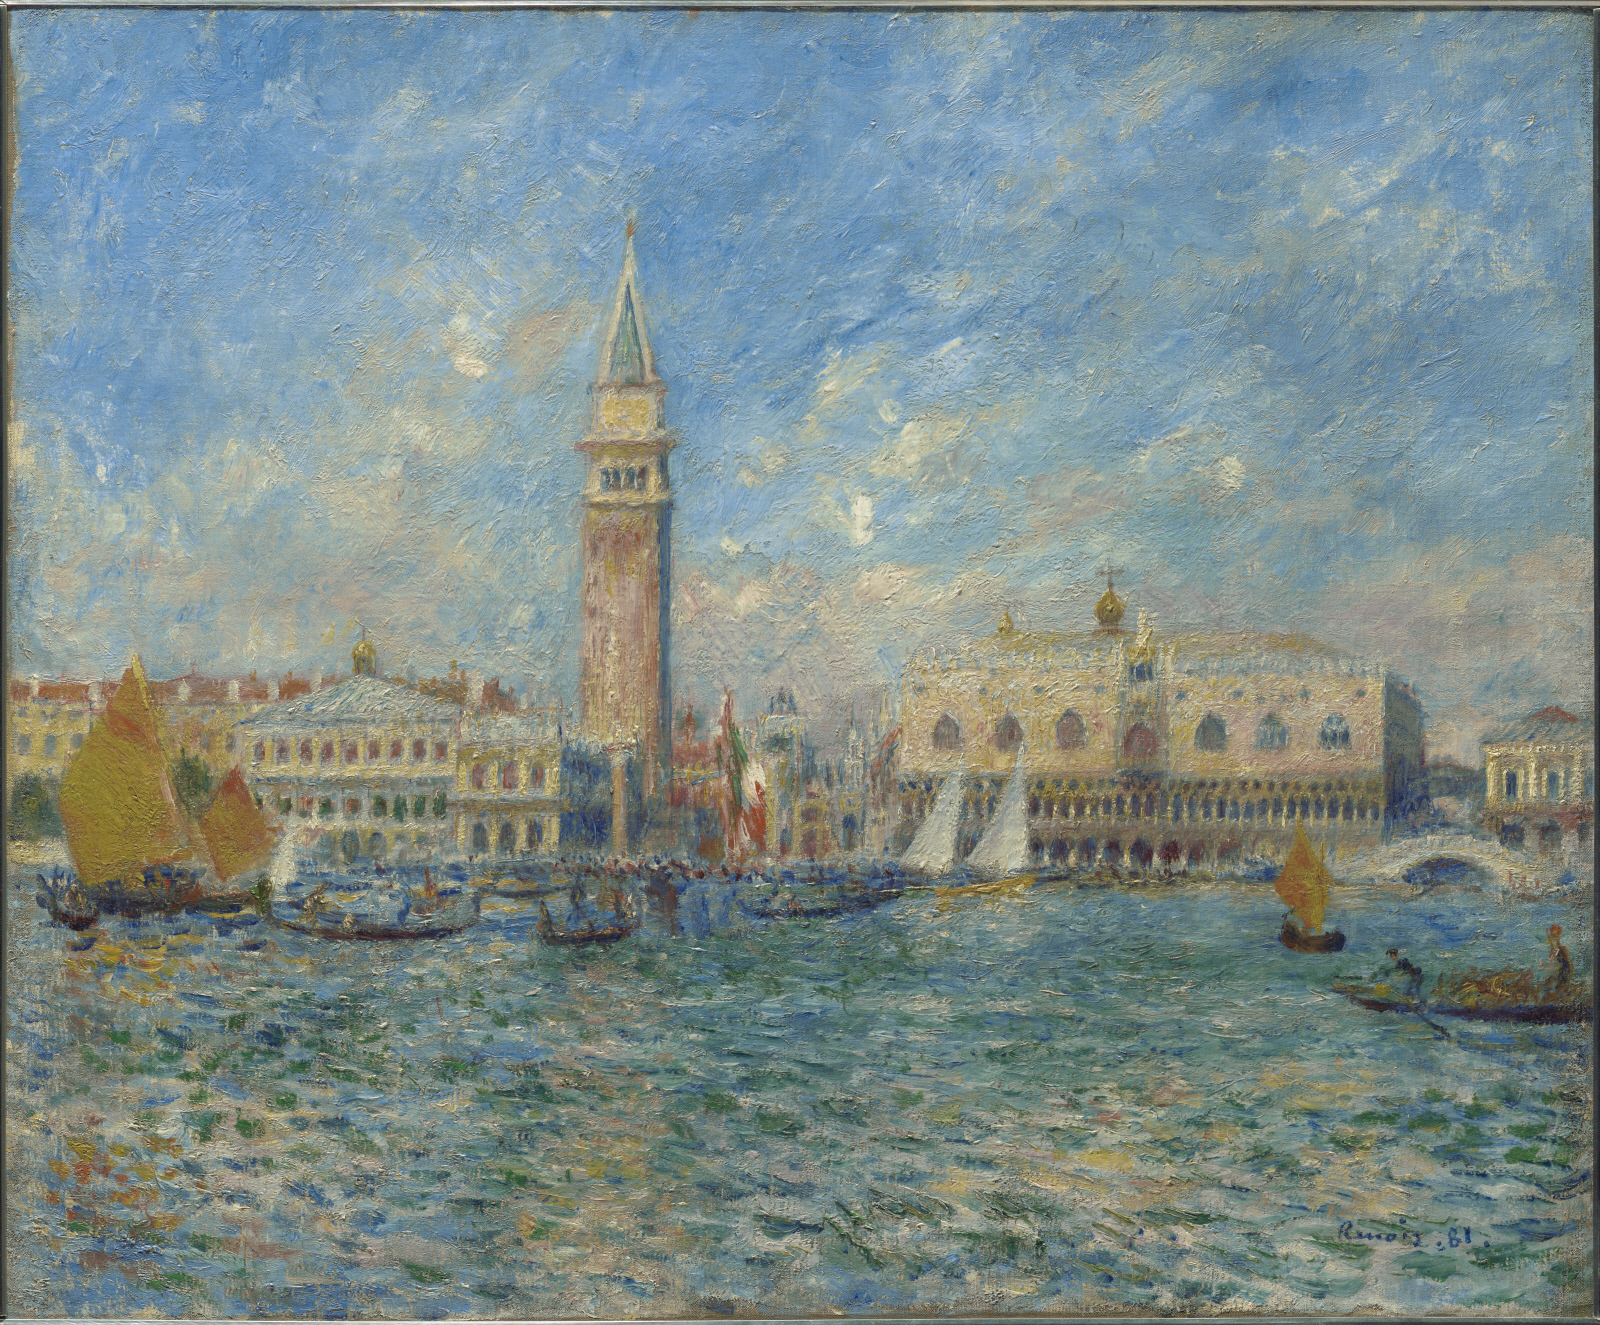 Дворец Дожей в Венеции by Pierre-Auguste Renoir - 1881 - 54.5 x 65.7 cм 